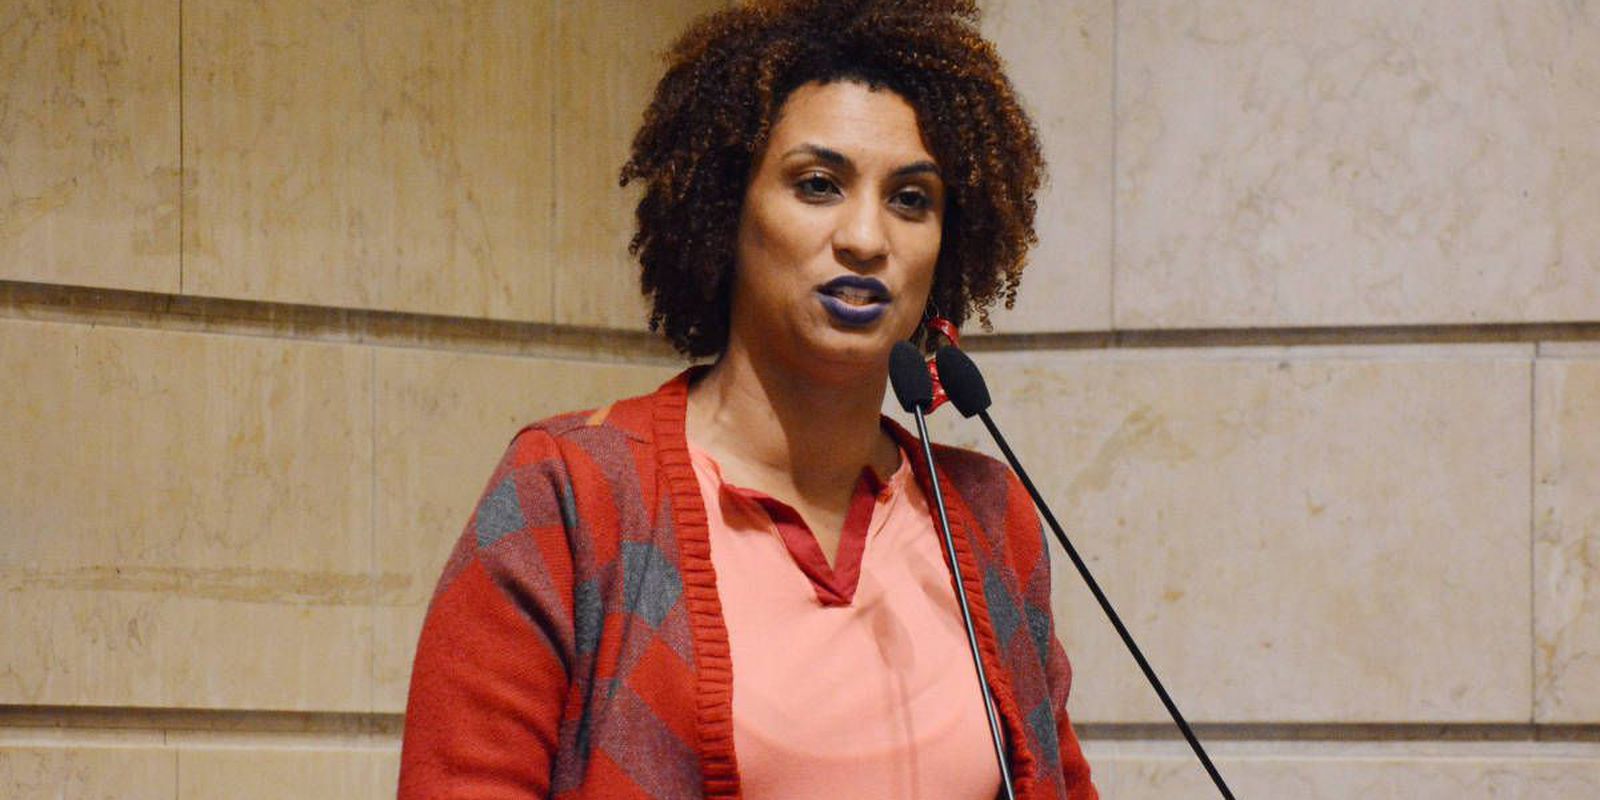 Rio MP appoints members to investigate Marielle Franco's death